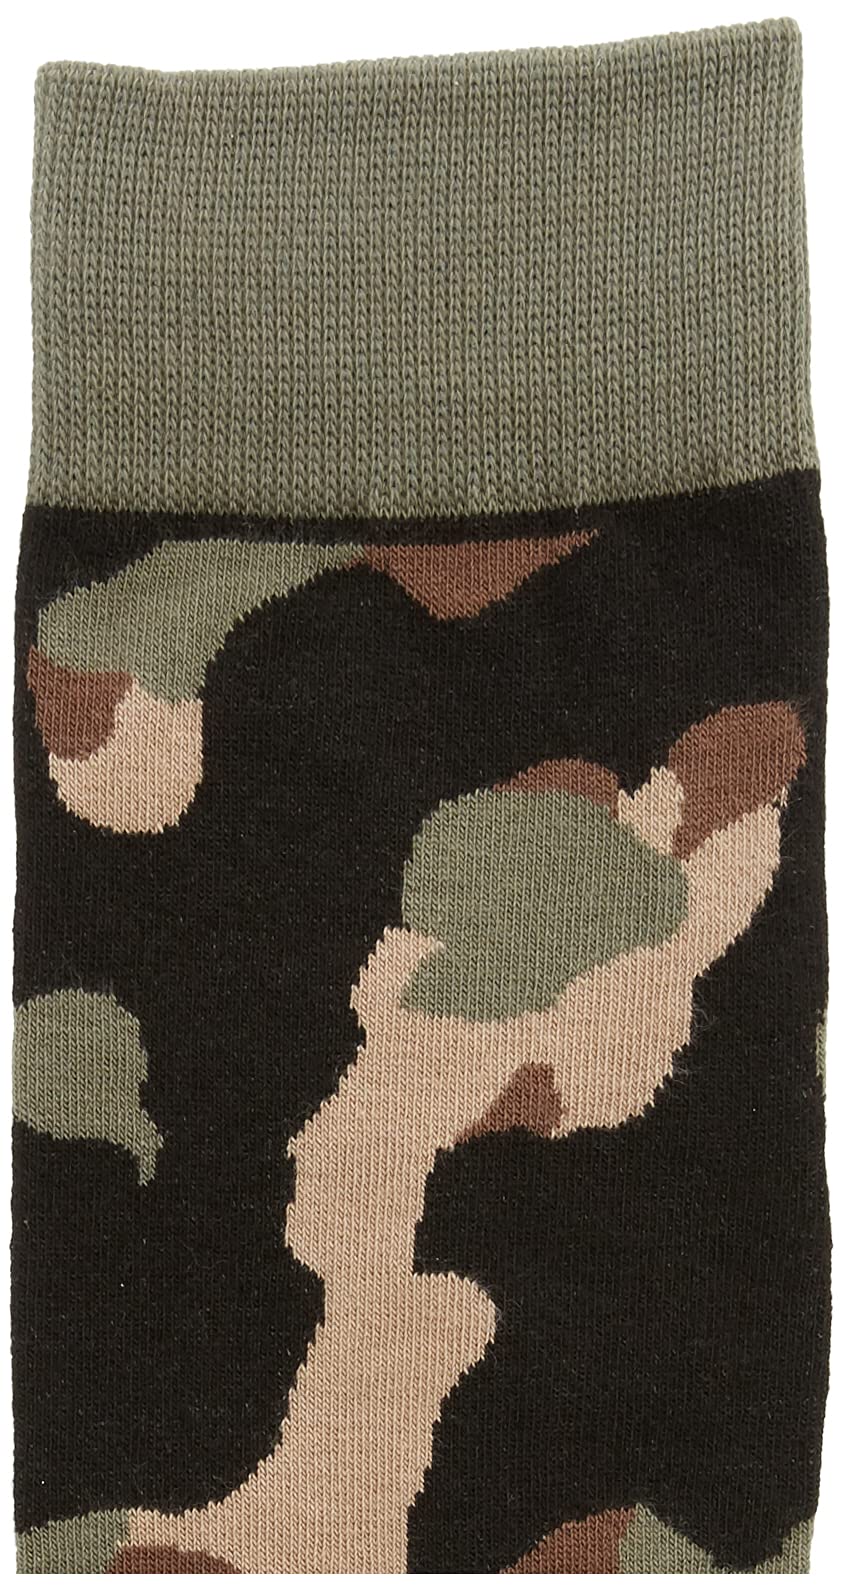 K. Bell Men's Cool Patterns and Design Novelty Crew Socks, Camo (Olive), Shoe Size: 6-12